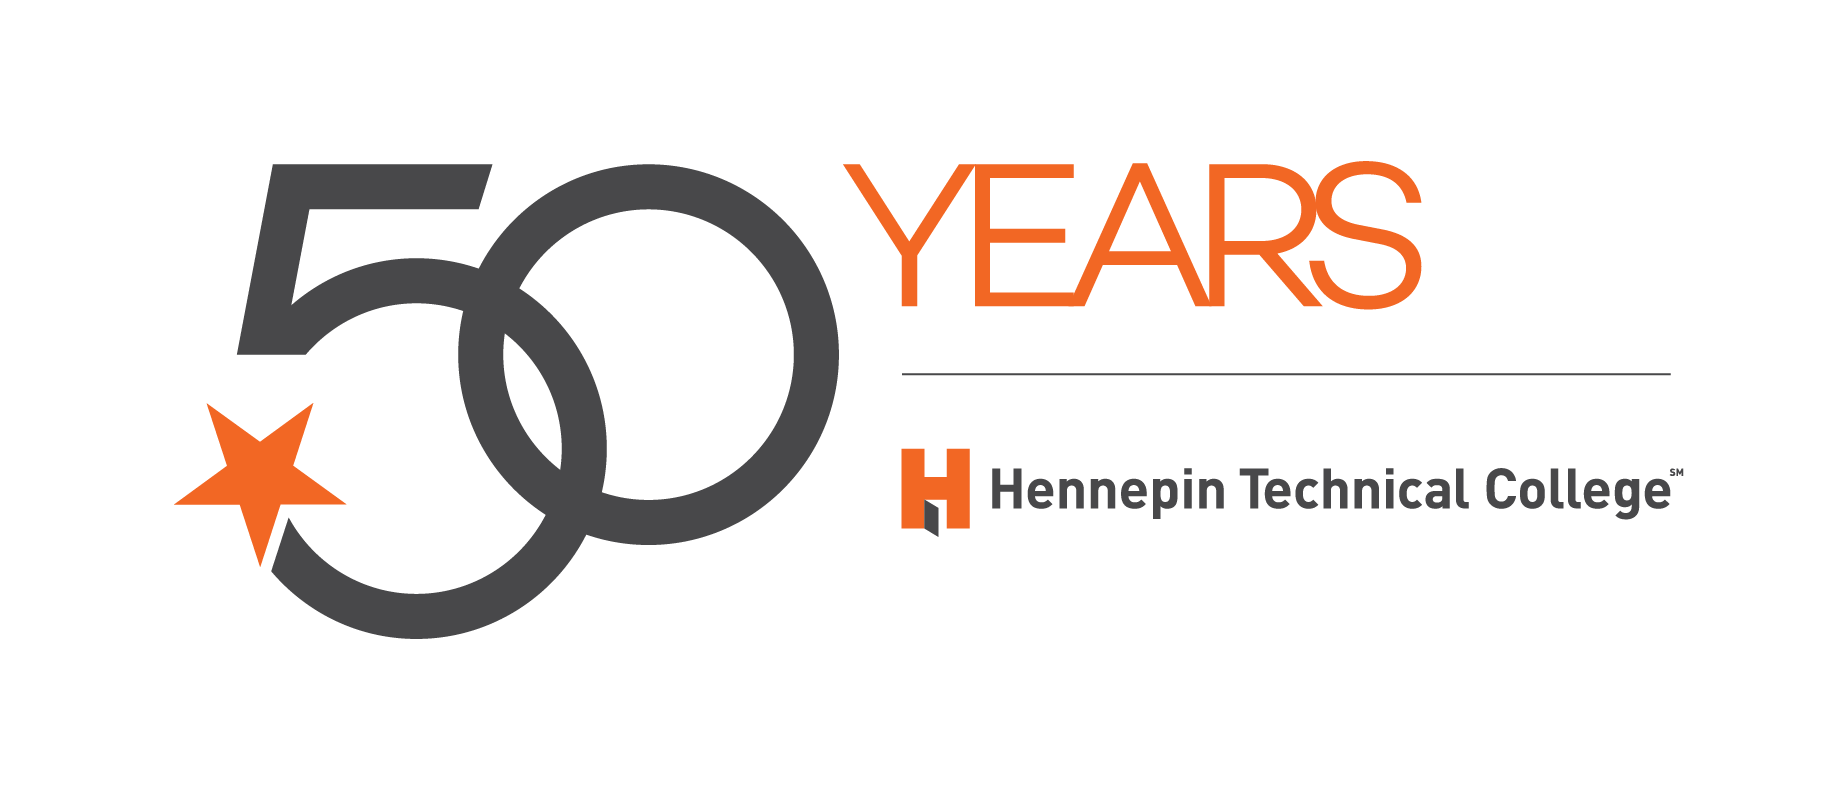 Hennepin Technical College 50th Anniversary logo